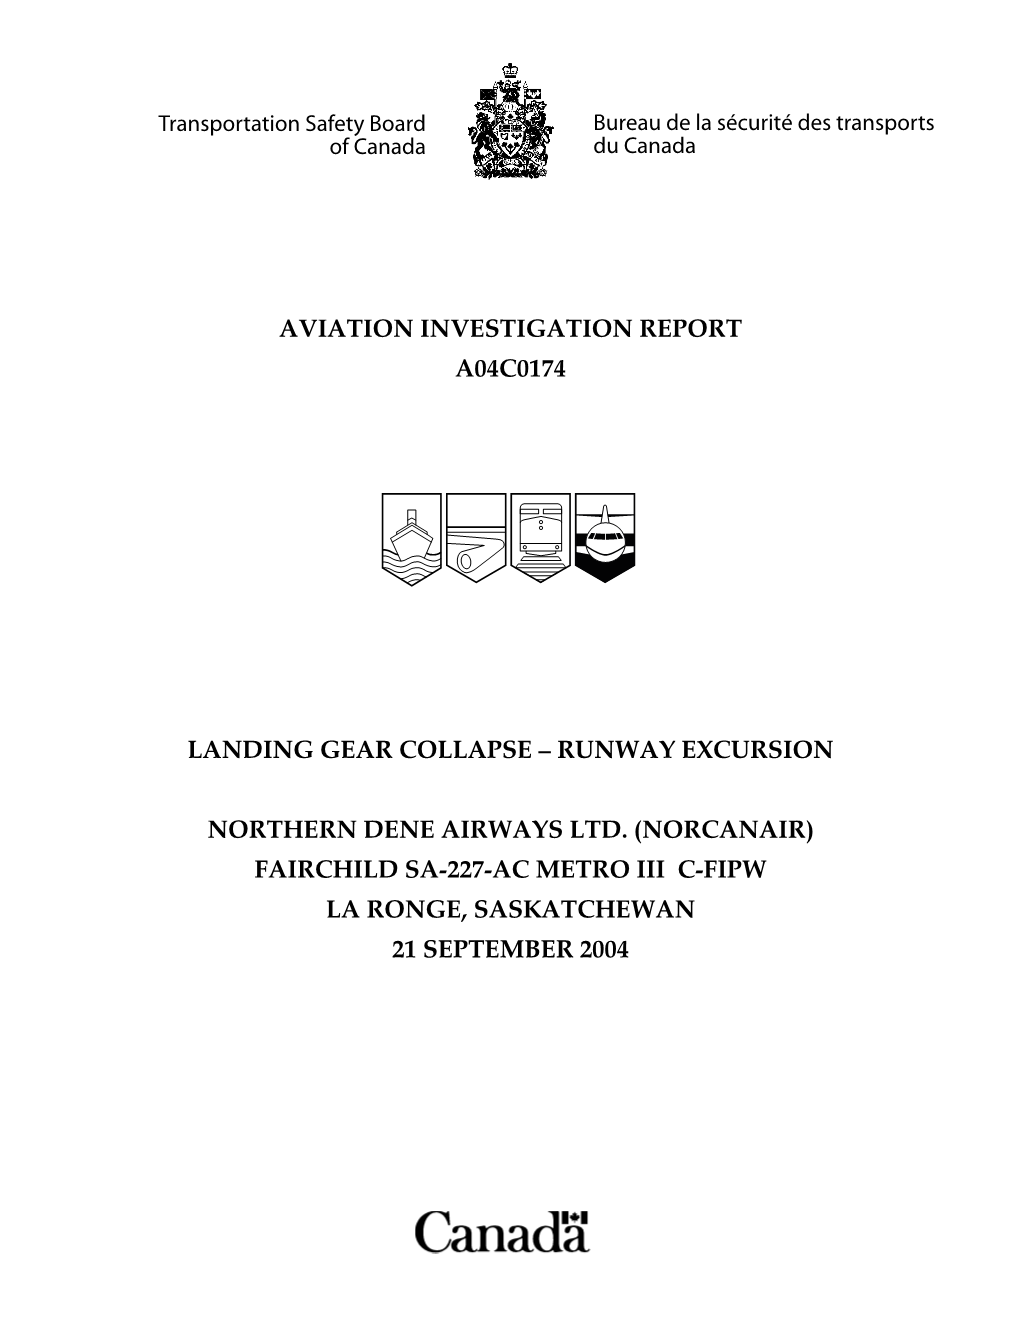 Aviation Investigation Report A04c0174 Landing Gear